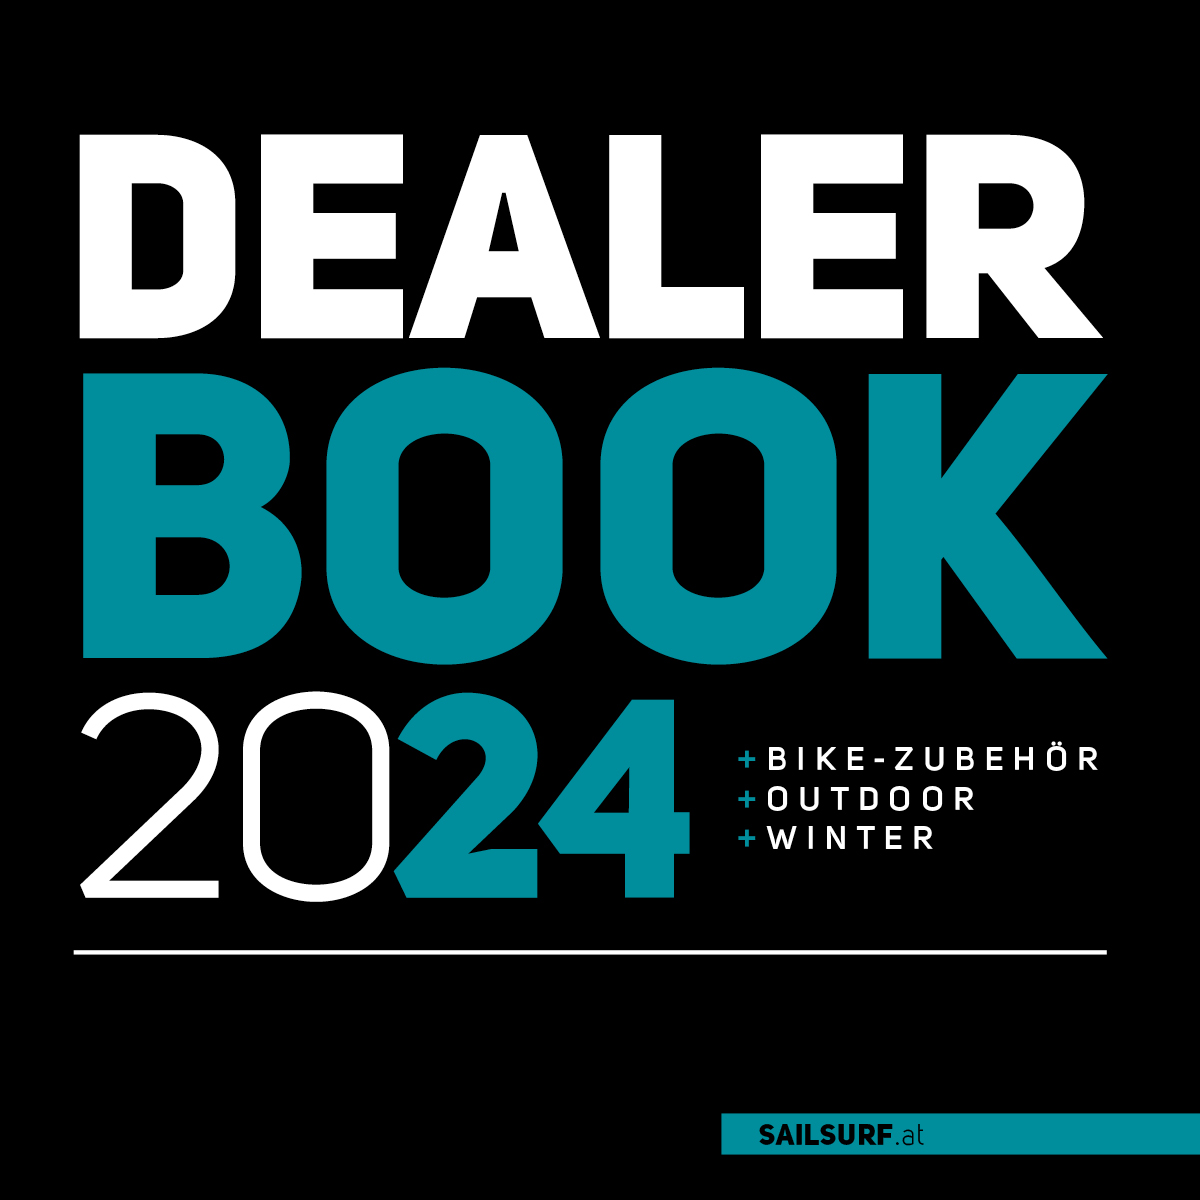 Sail+Surf | Dealer Book 2024